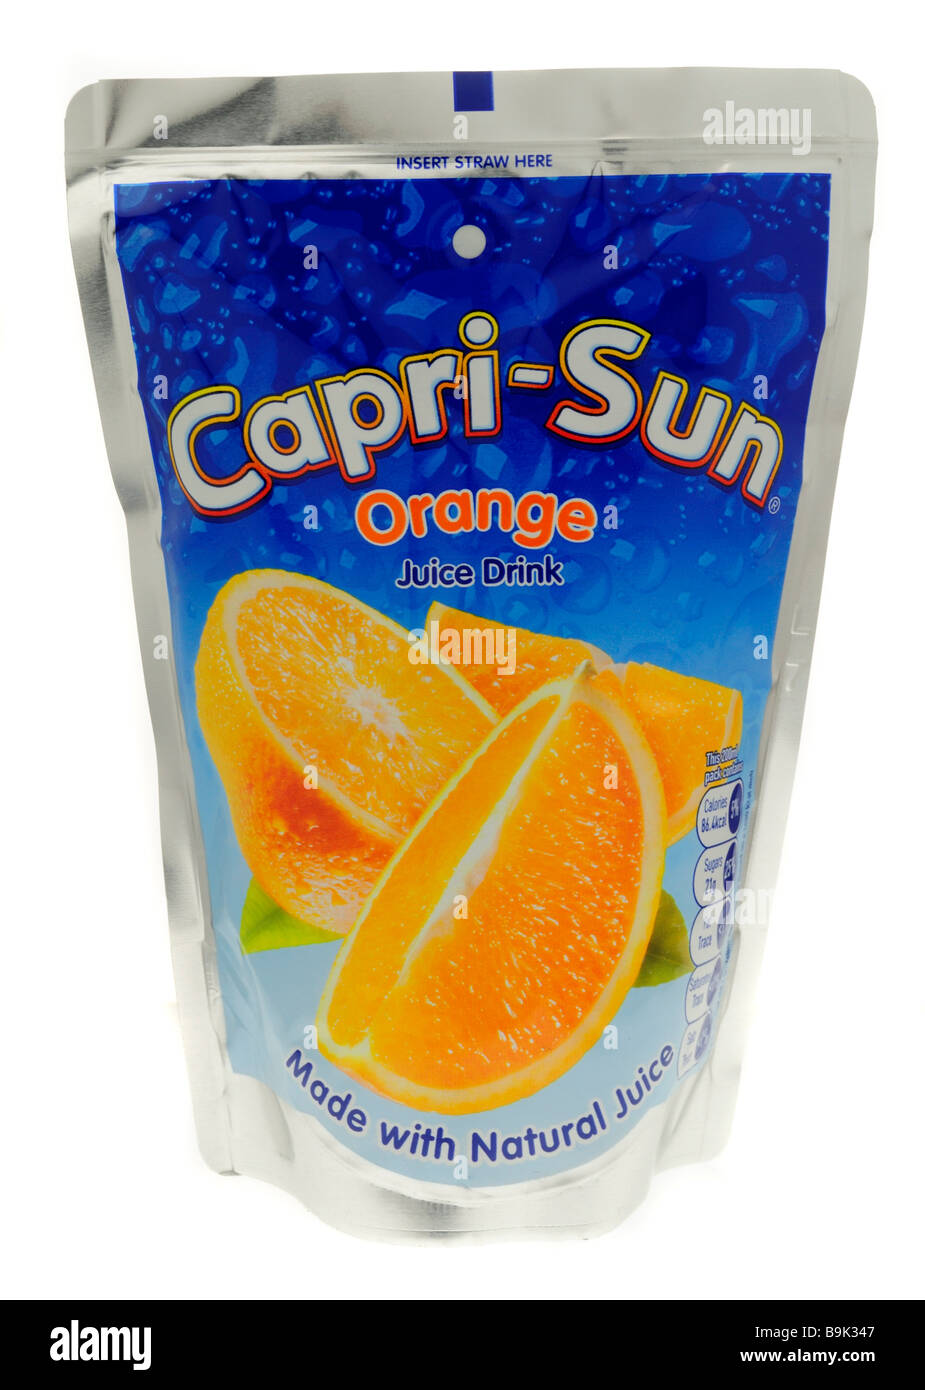 https://c8.alamy.com/comp/B9K347/capri-sun-orange-juice-drink-B9K347.jpg